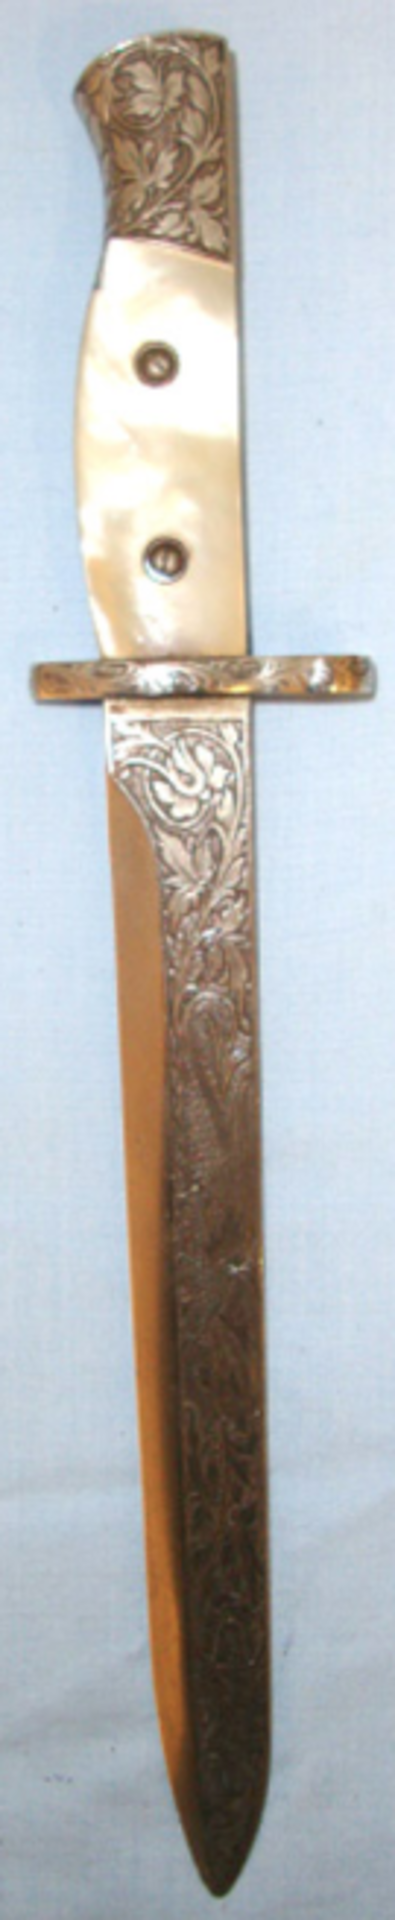 VERY RARE, Original 1960’s-1970’s Belgian FN Presentation Knife Bayonet With Engraved Blade - Image 3 of 3